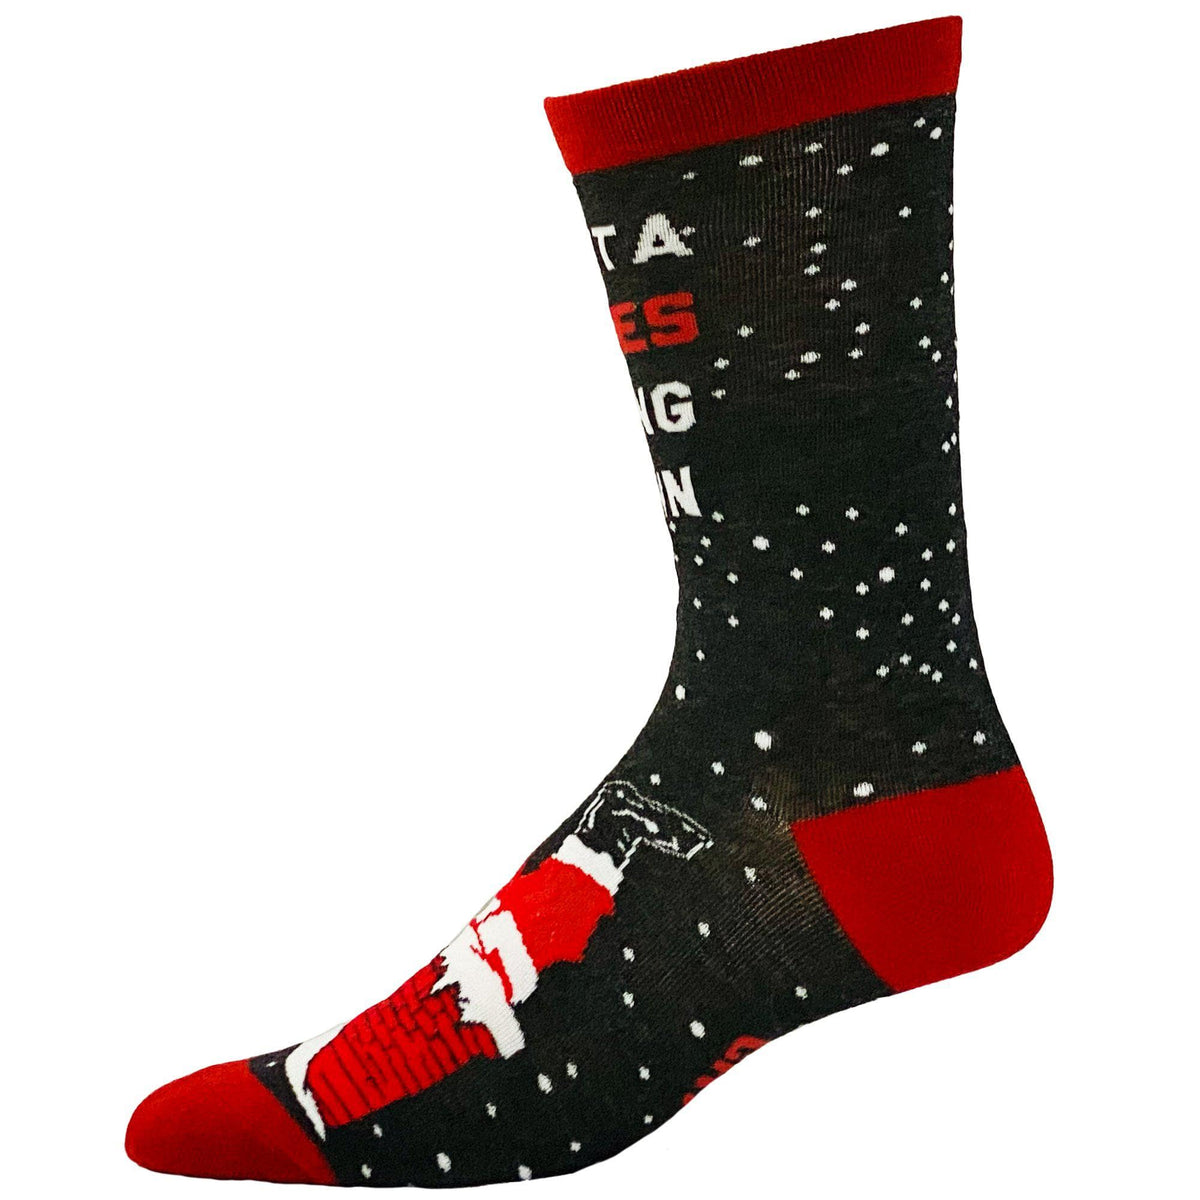 Men&#39;s Santa Loves Going Down Socks - Crazy Dog T-Shirts